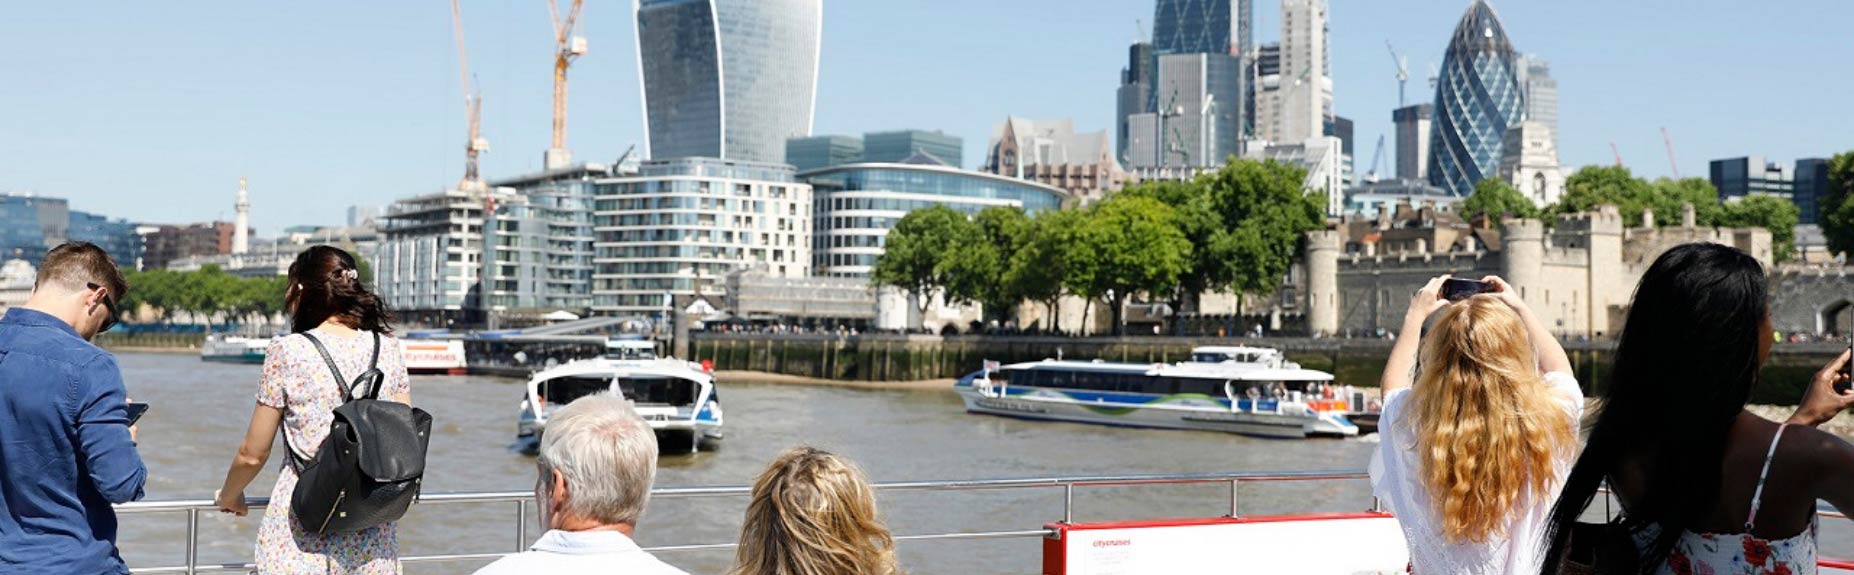 Mensen op bootdek Theems en Londen op achtergrond